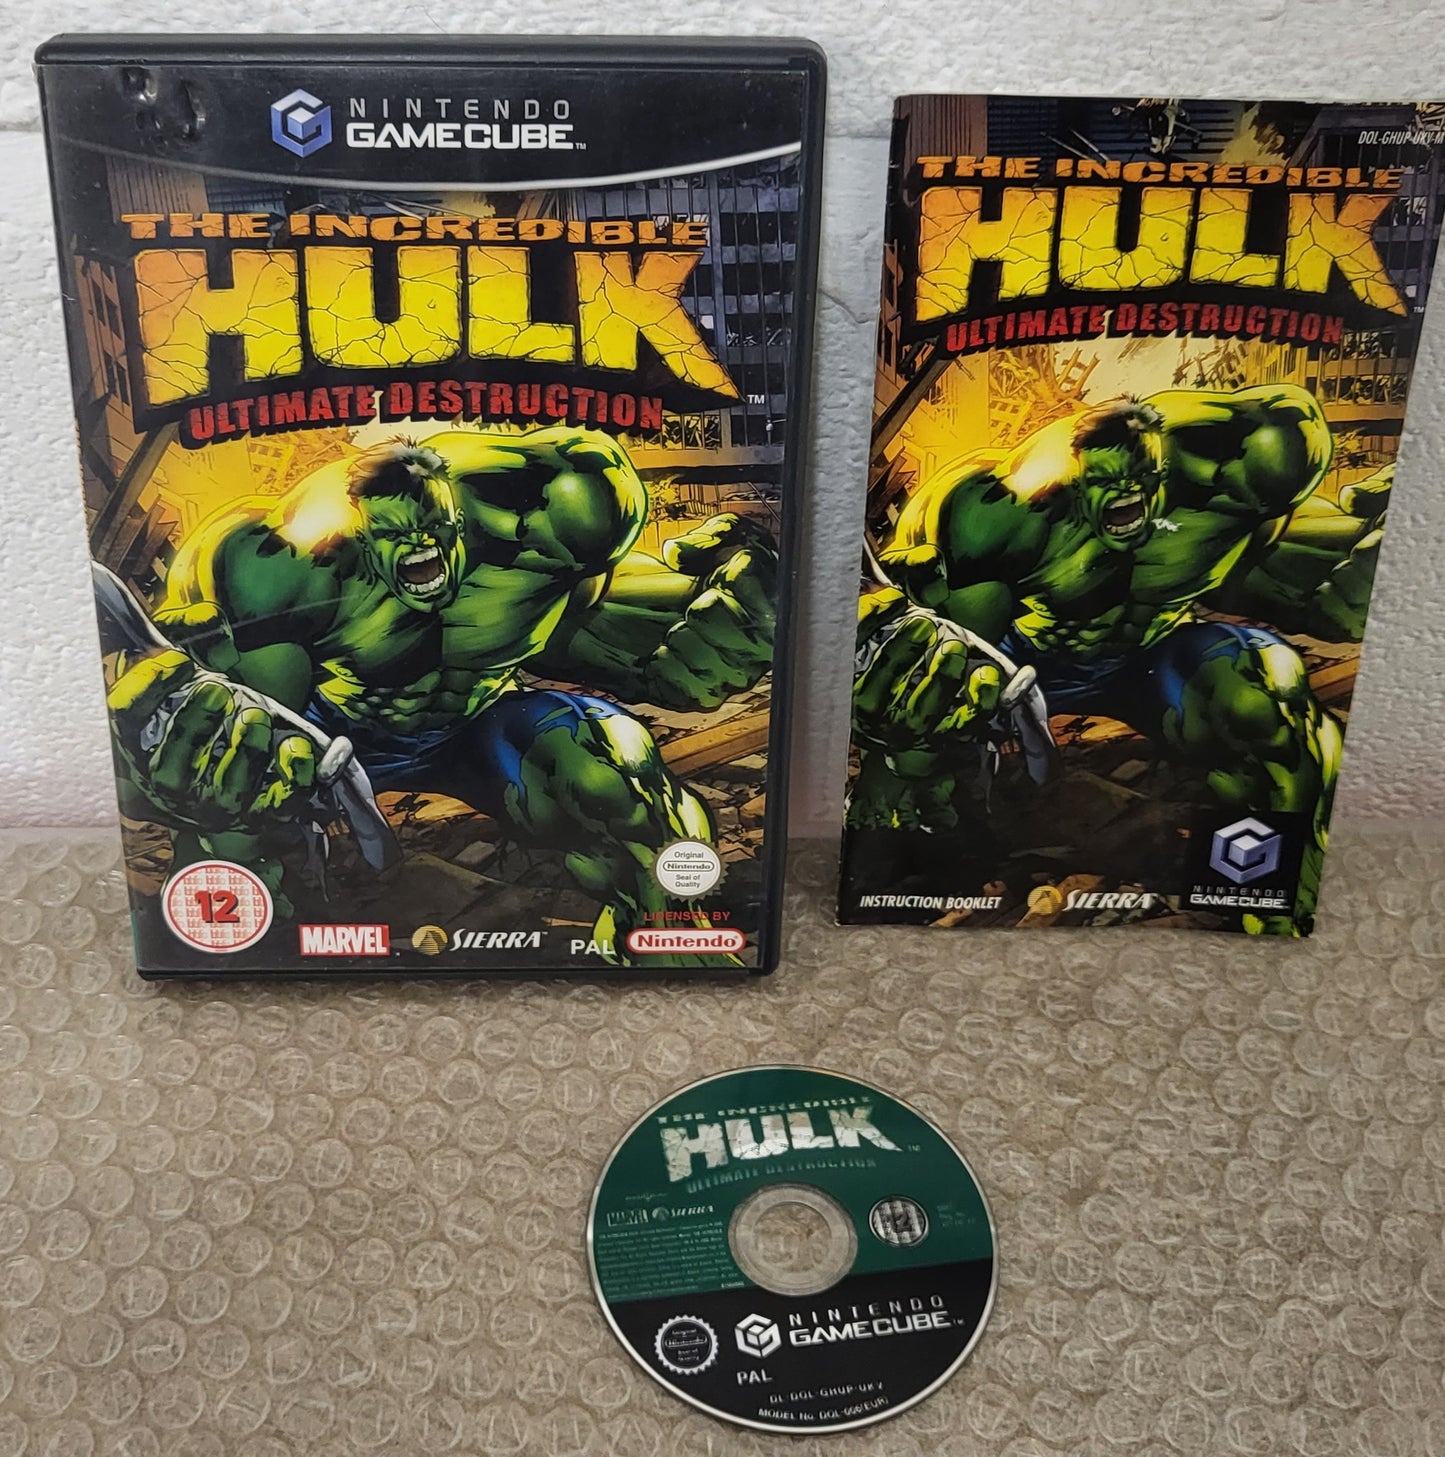 The Incredible Hulk Ultimate Destruction Nintendo GameCube Game